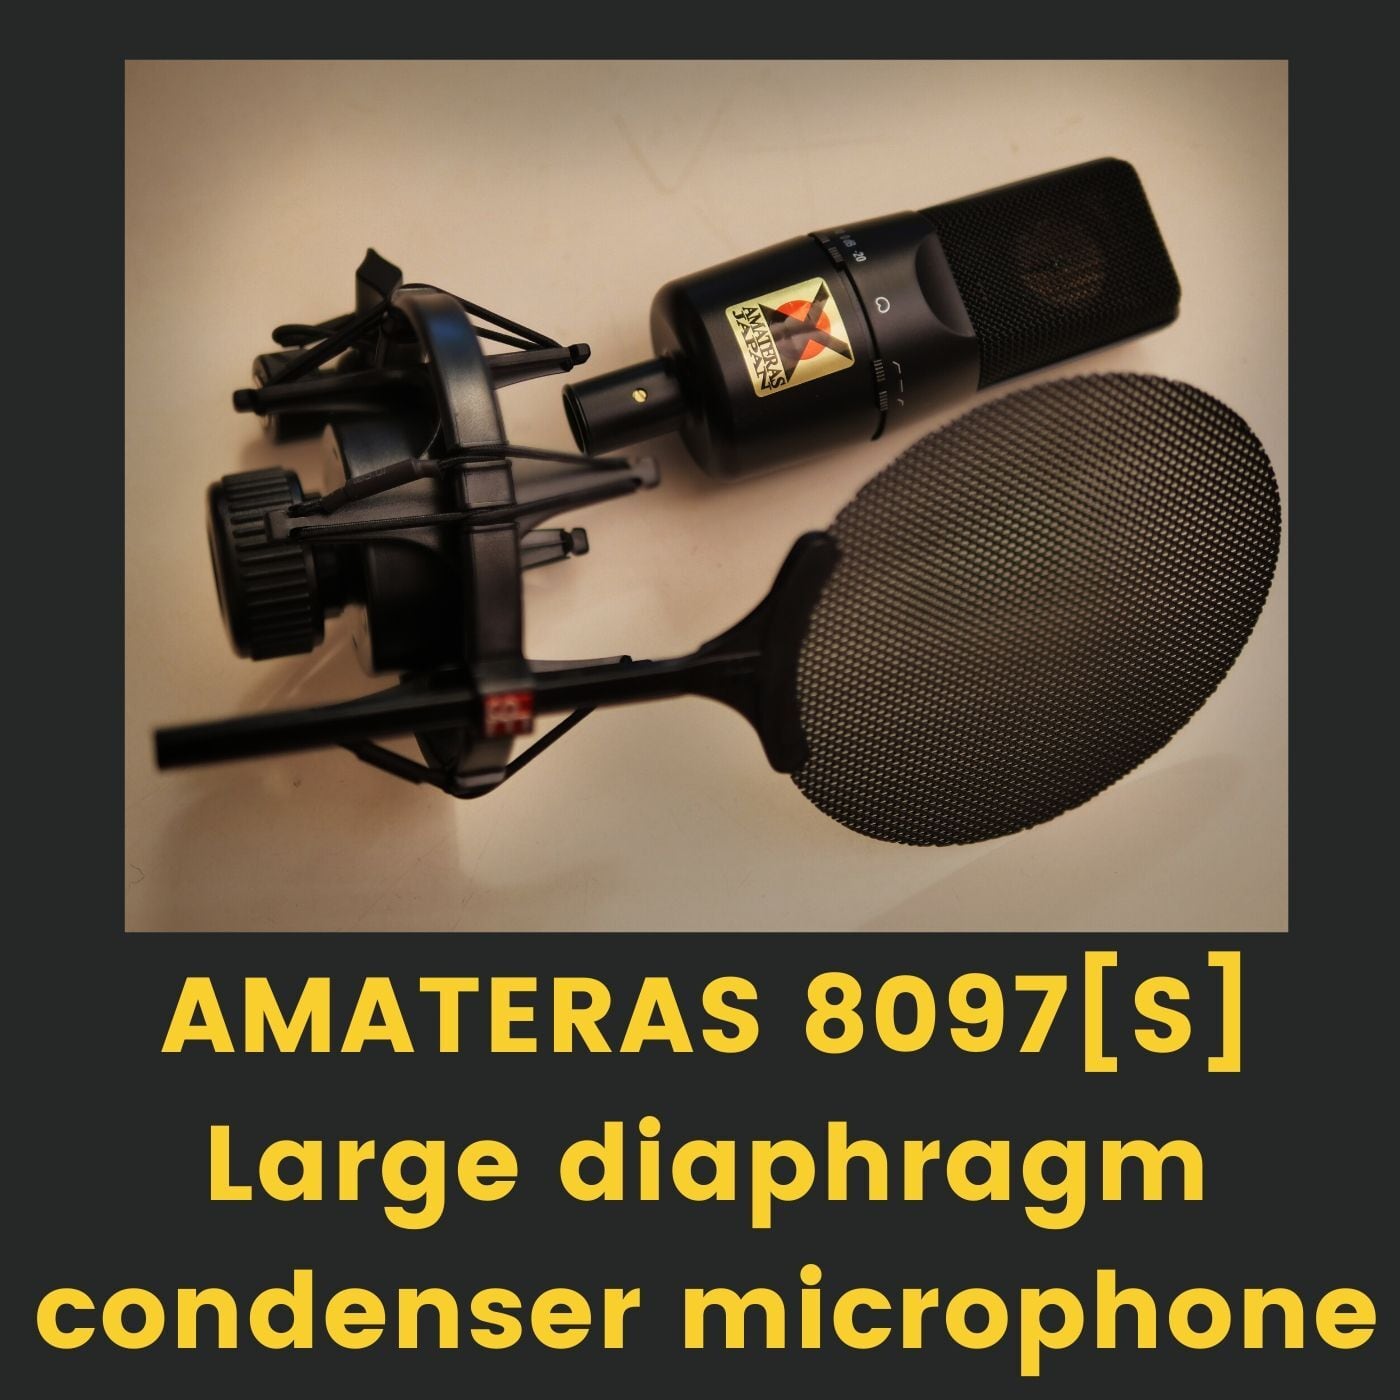 AMATERAS 8097[S] Large diaphragm condenser microphone | AMATERASHOP